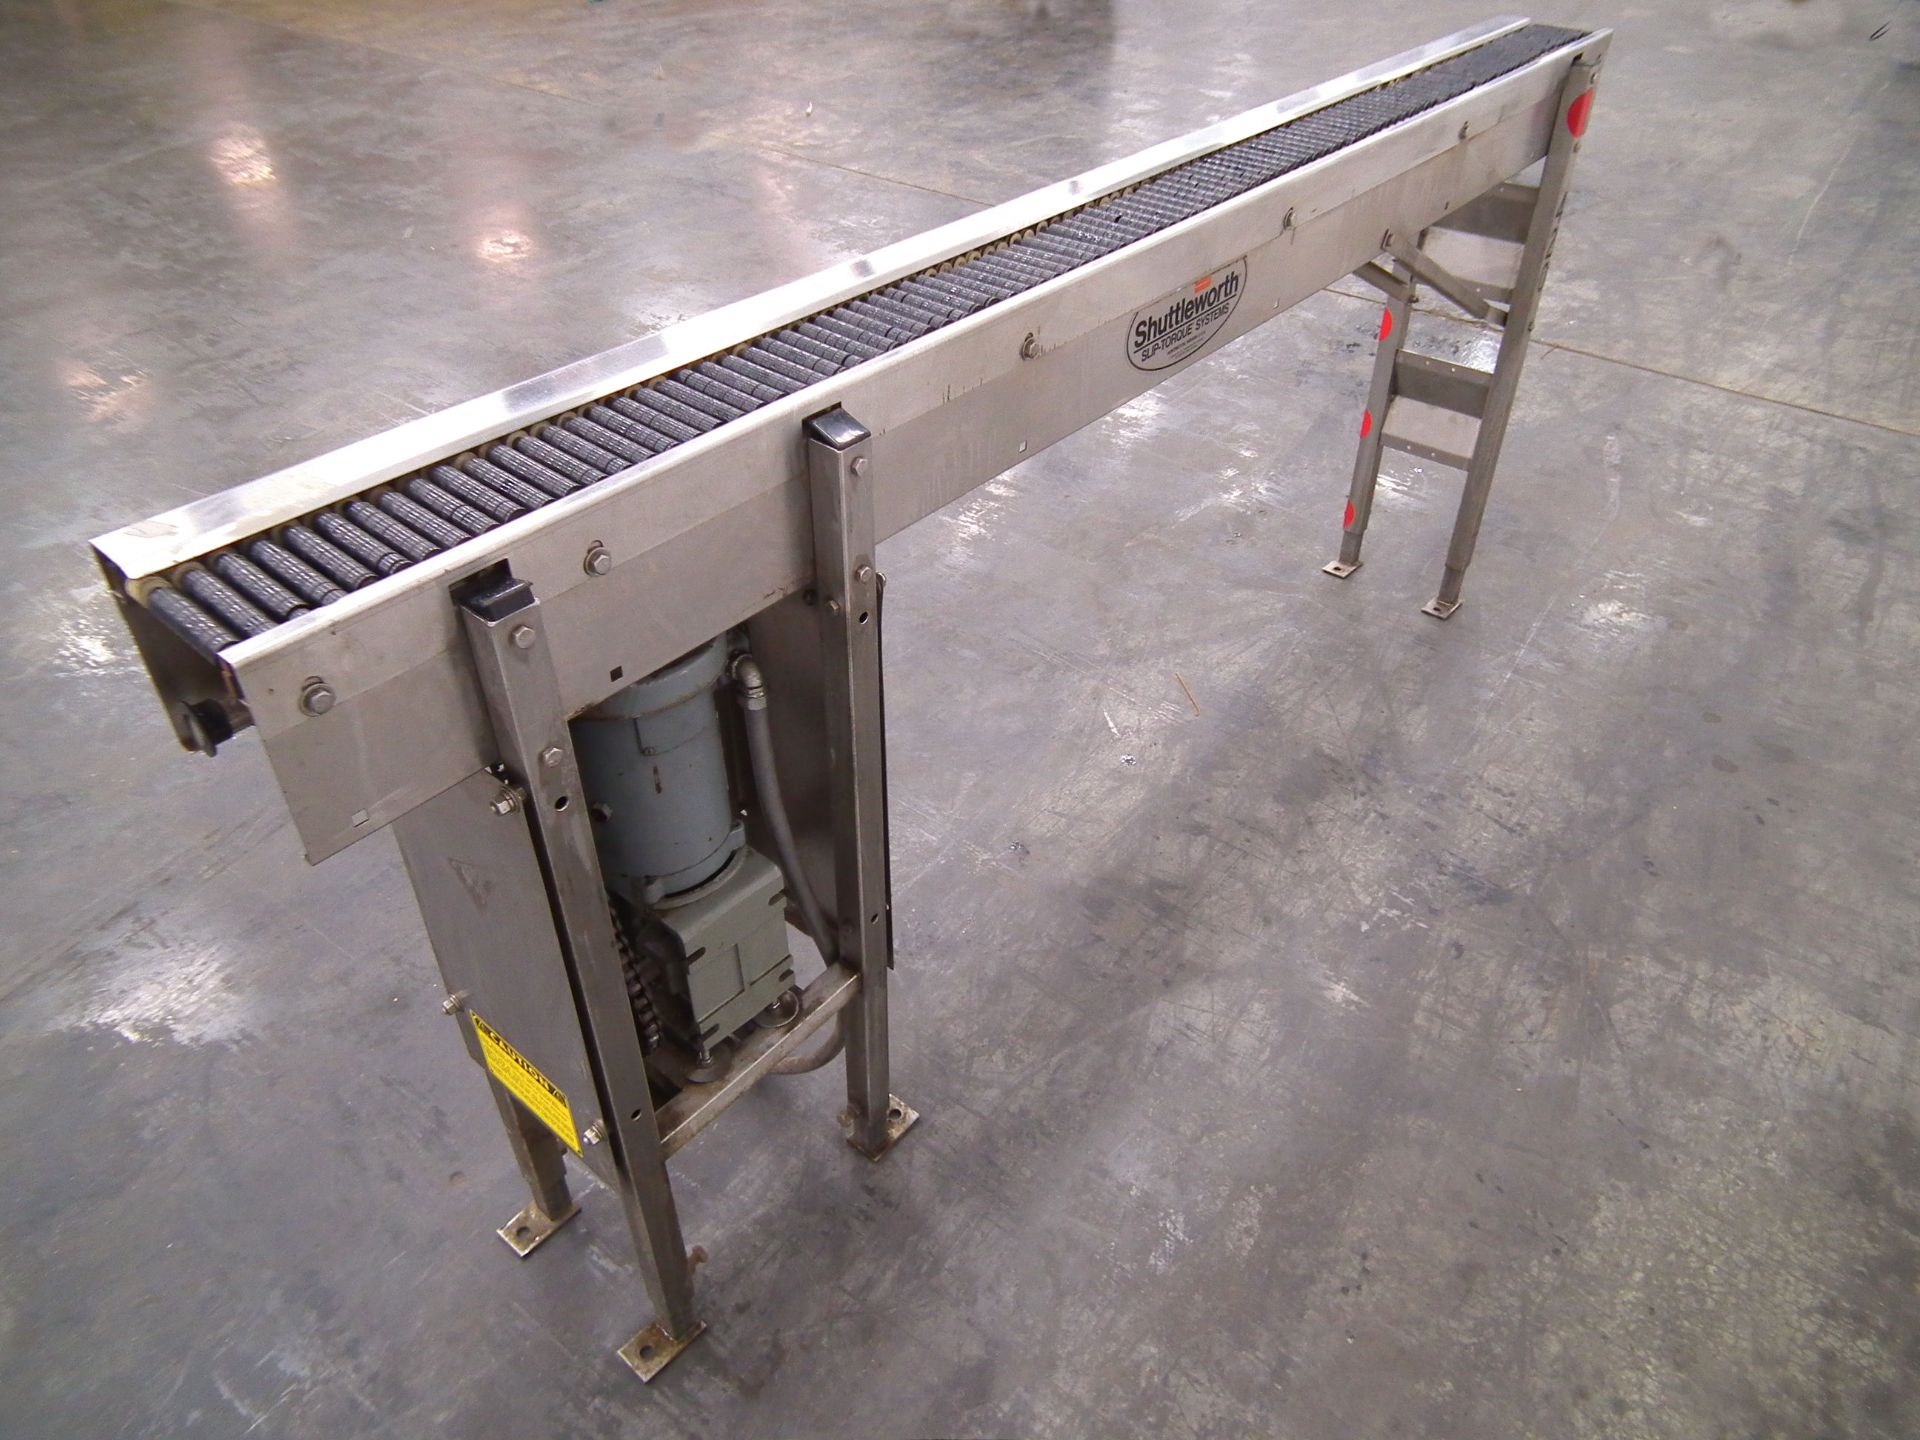 Shuttleworth Slip Torque Conveyor 4" Wd x 8' Long A4738 - Image 5 of 6